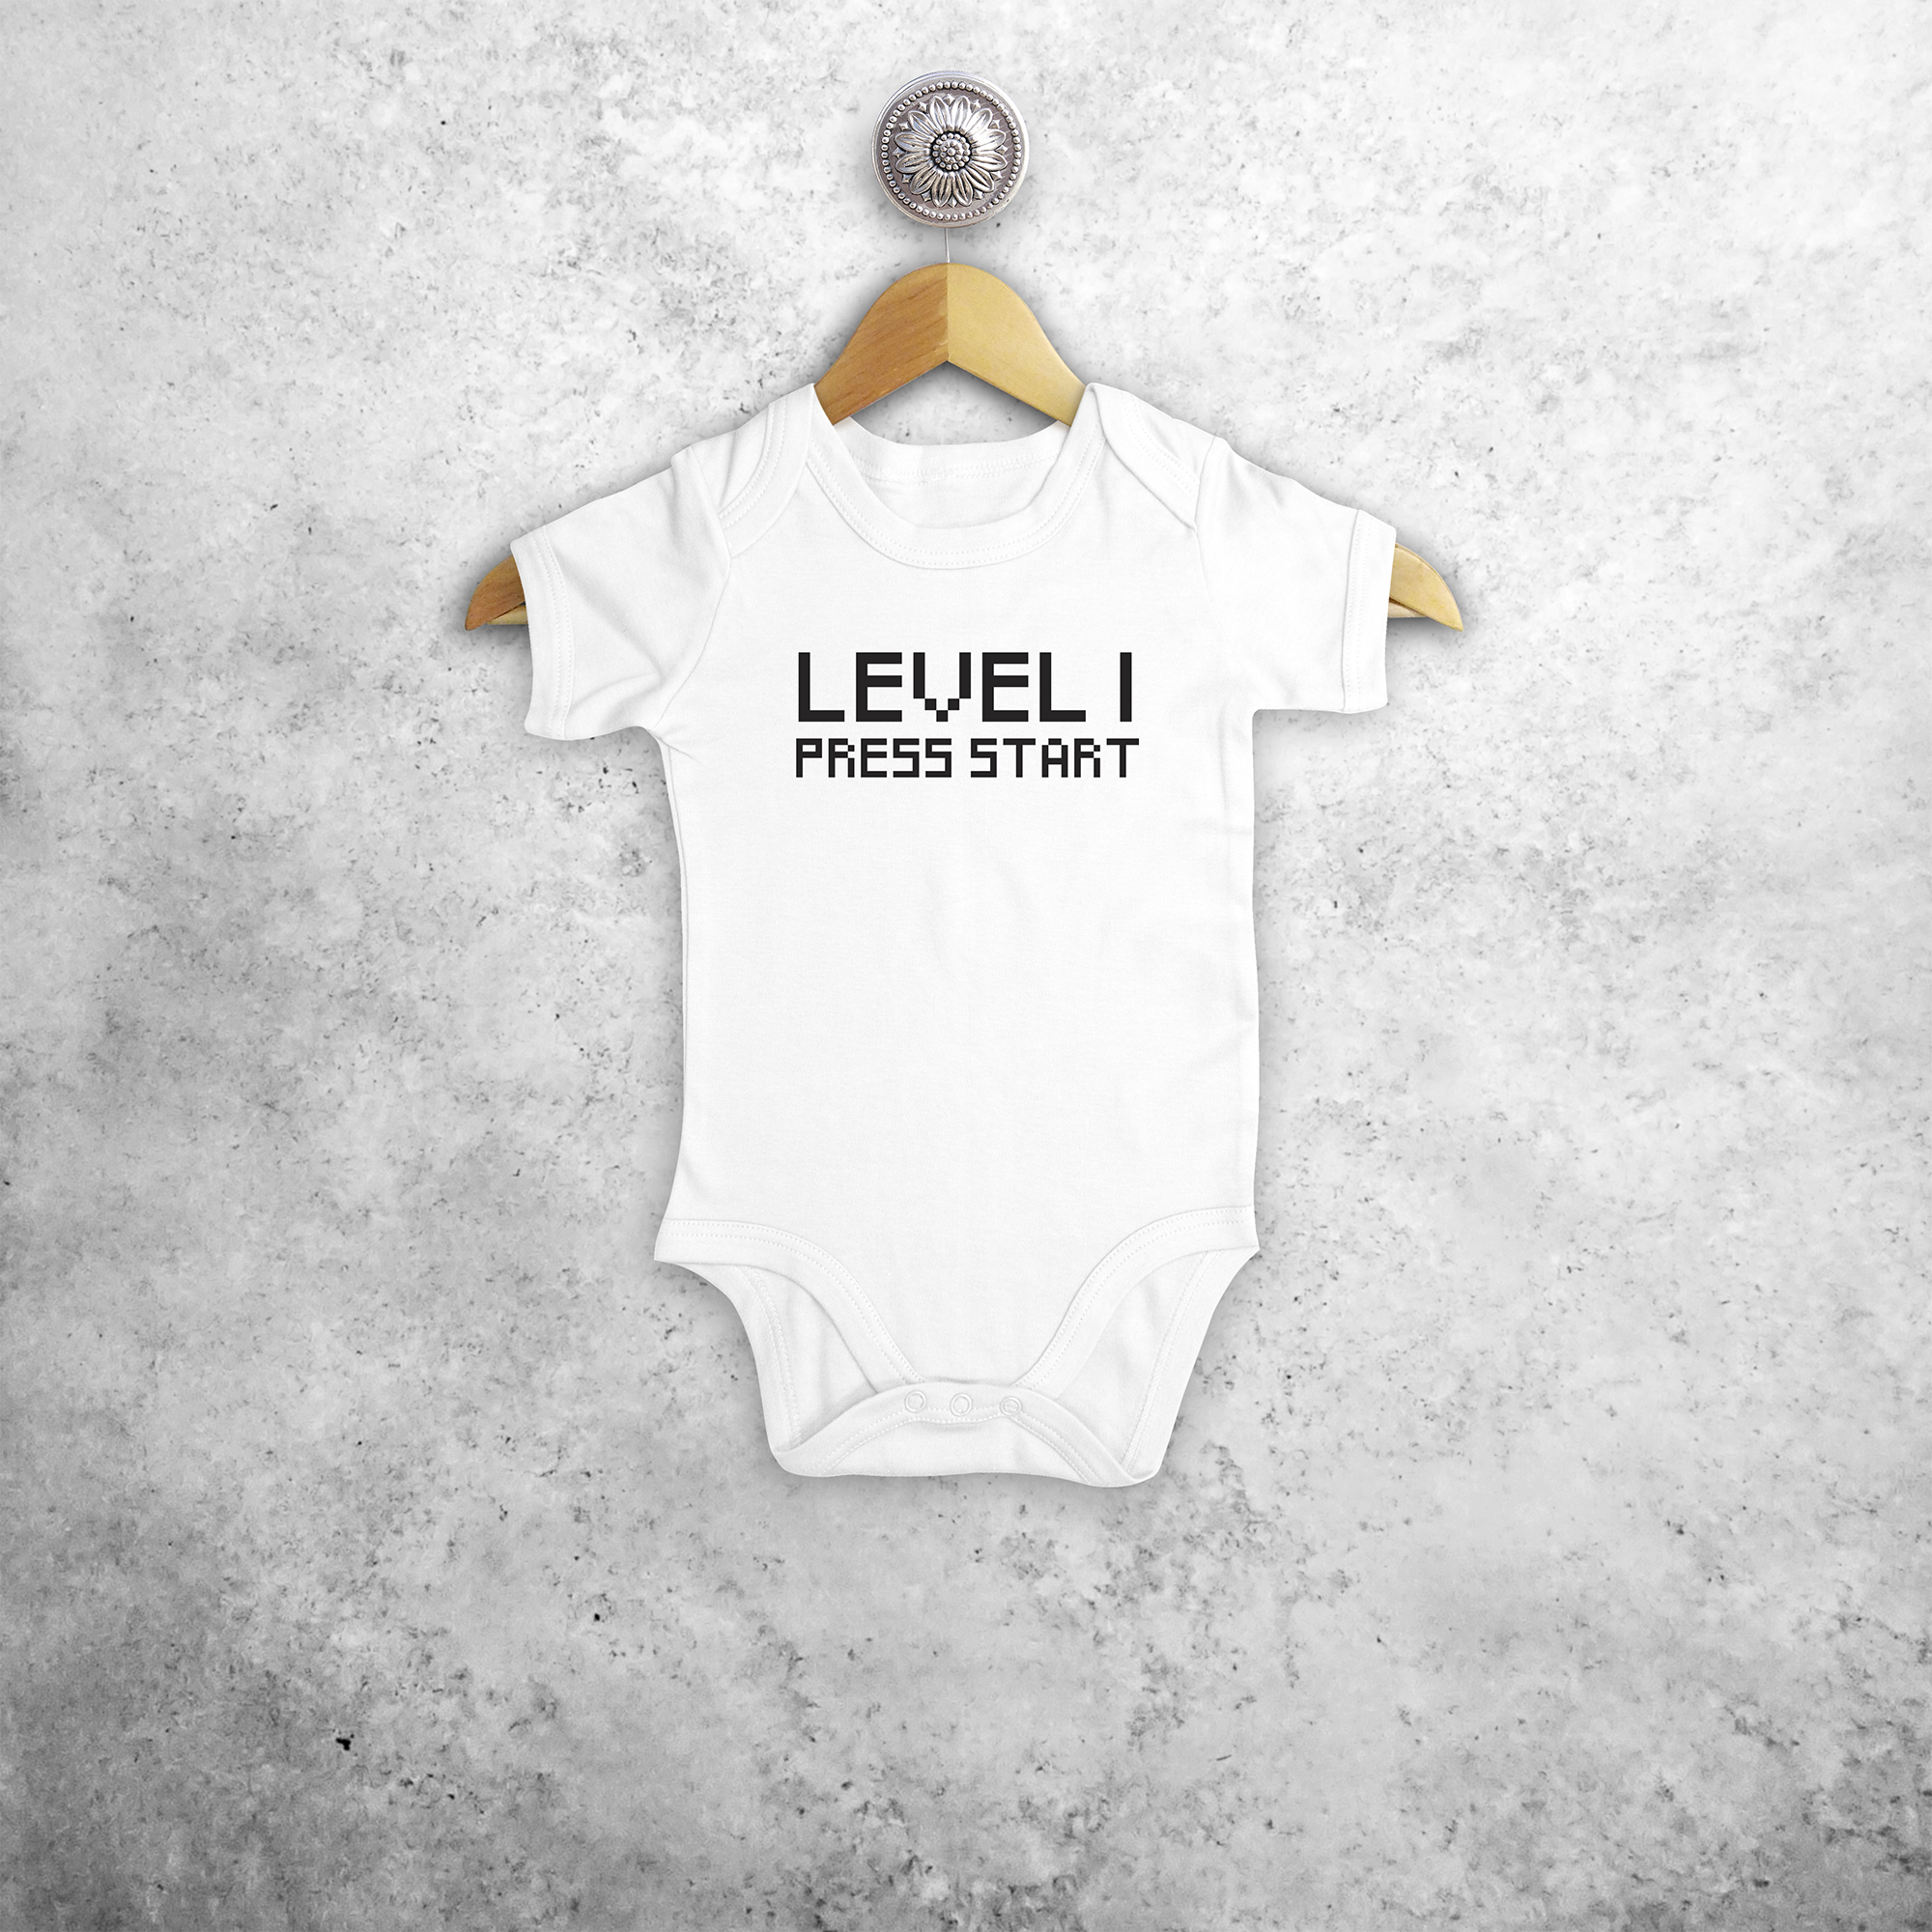 'Level... - Press start' baby kruippakje met korte mouwen